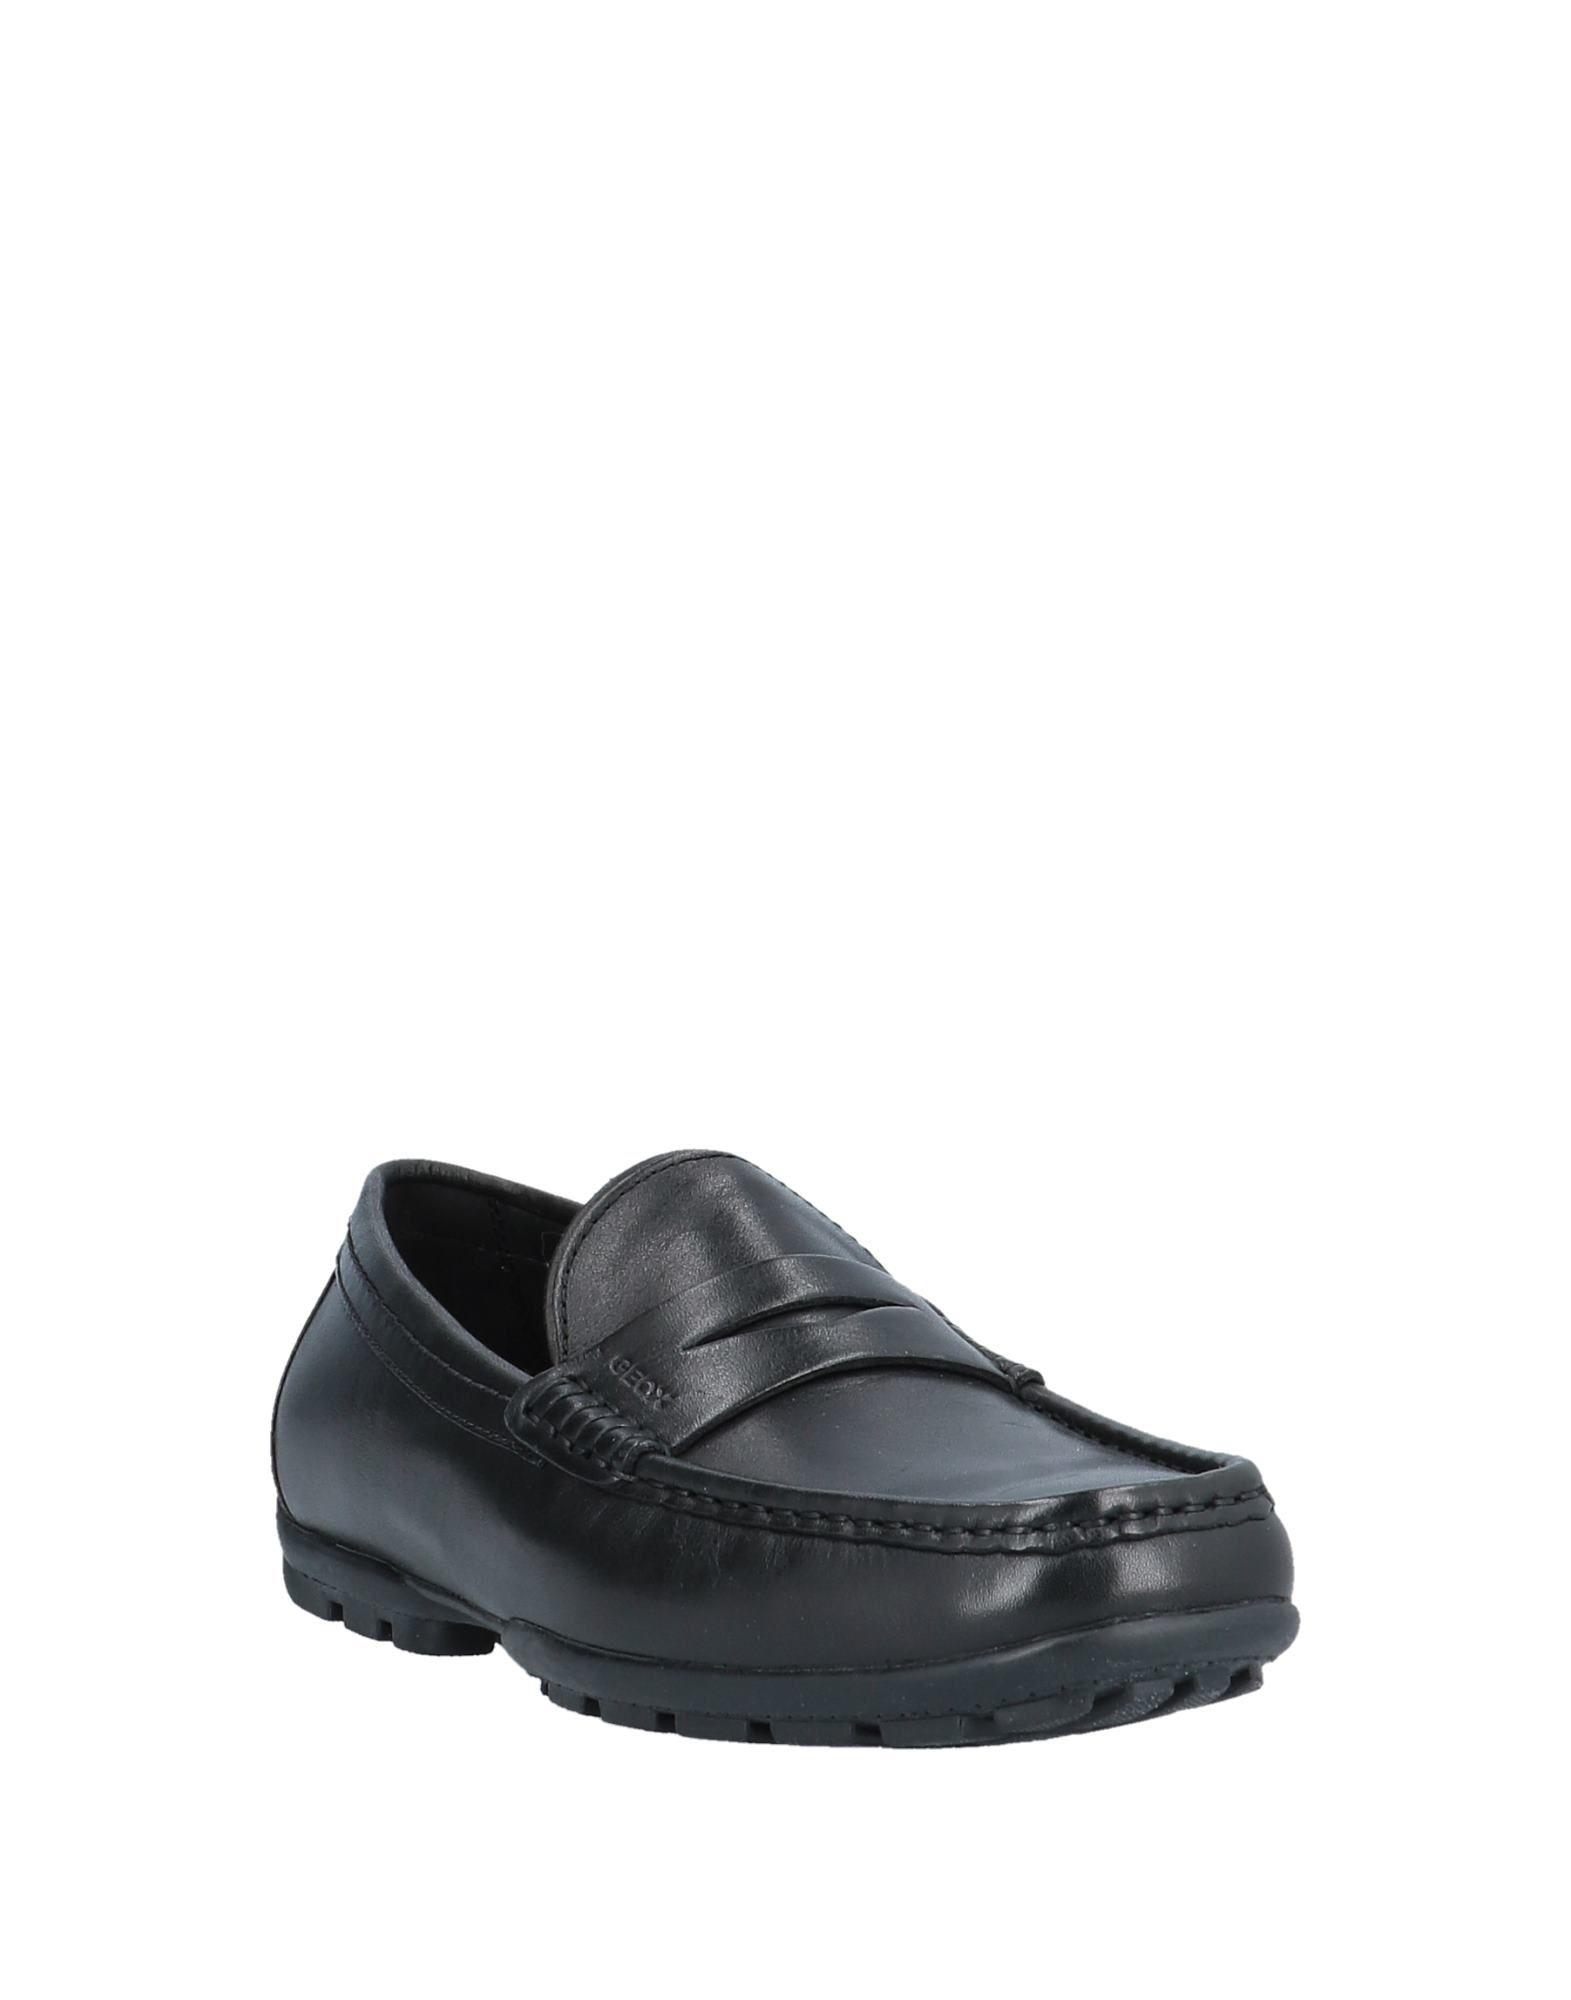 Geox Loafer in Black for Men - Lyst